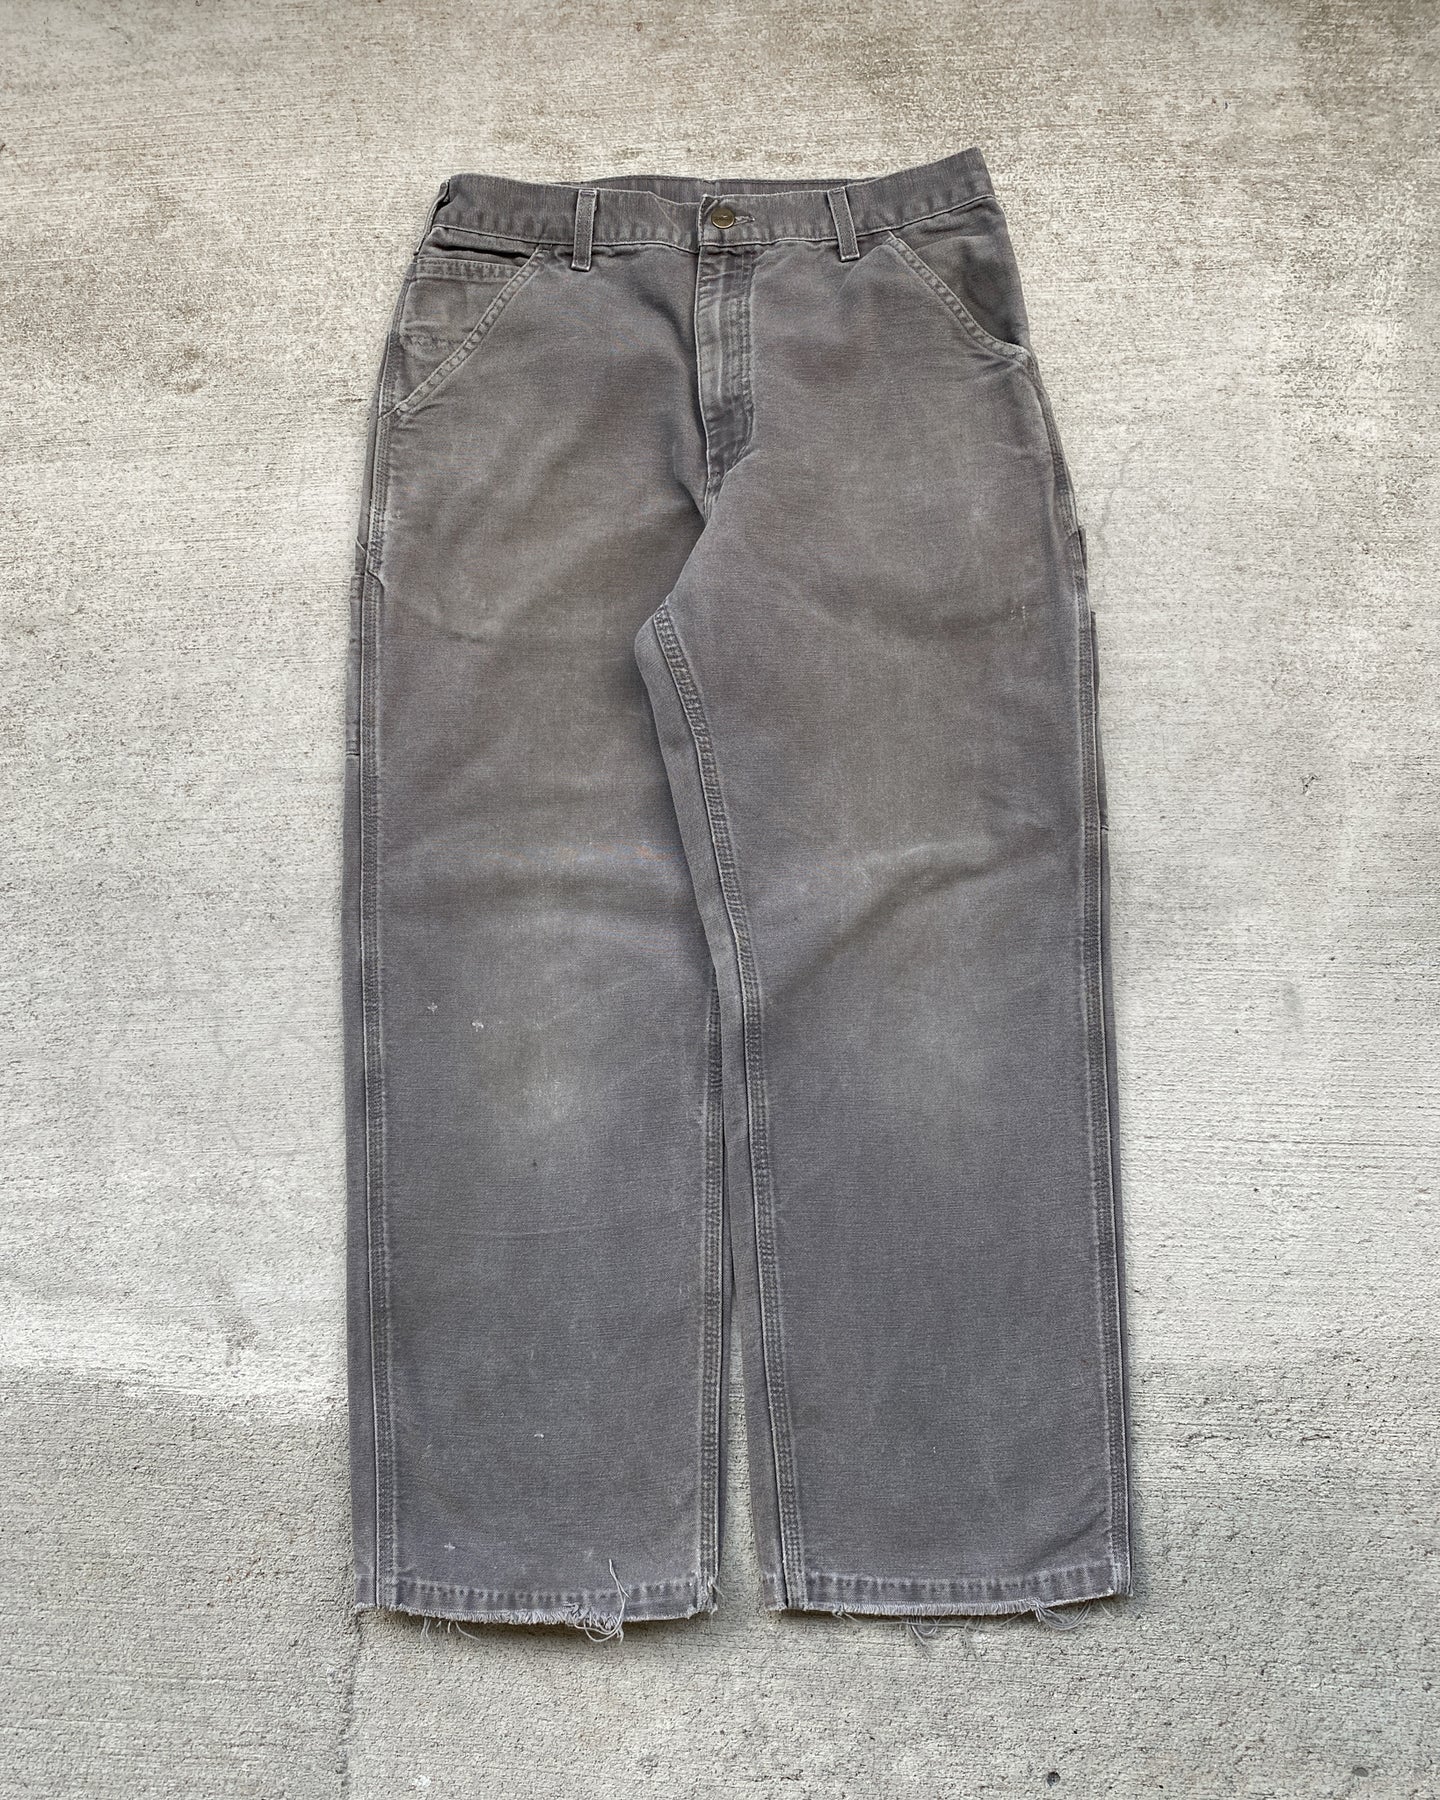 1990s Carhartt Gravel Grey Carpenter Work Pants - Size 33 x 29